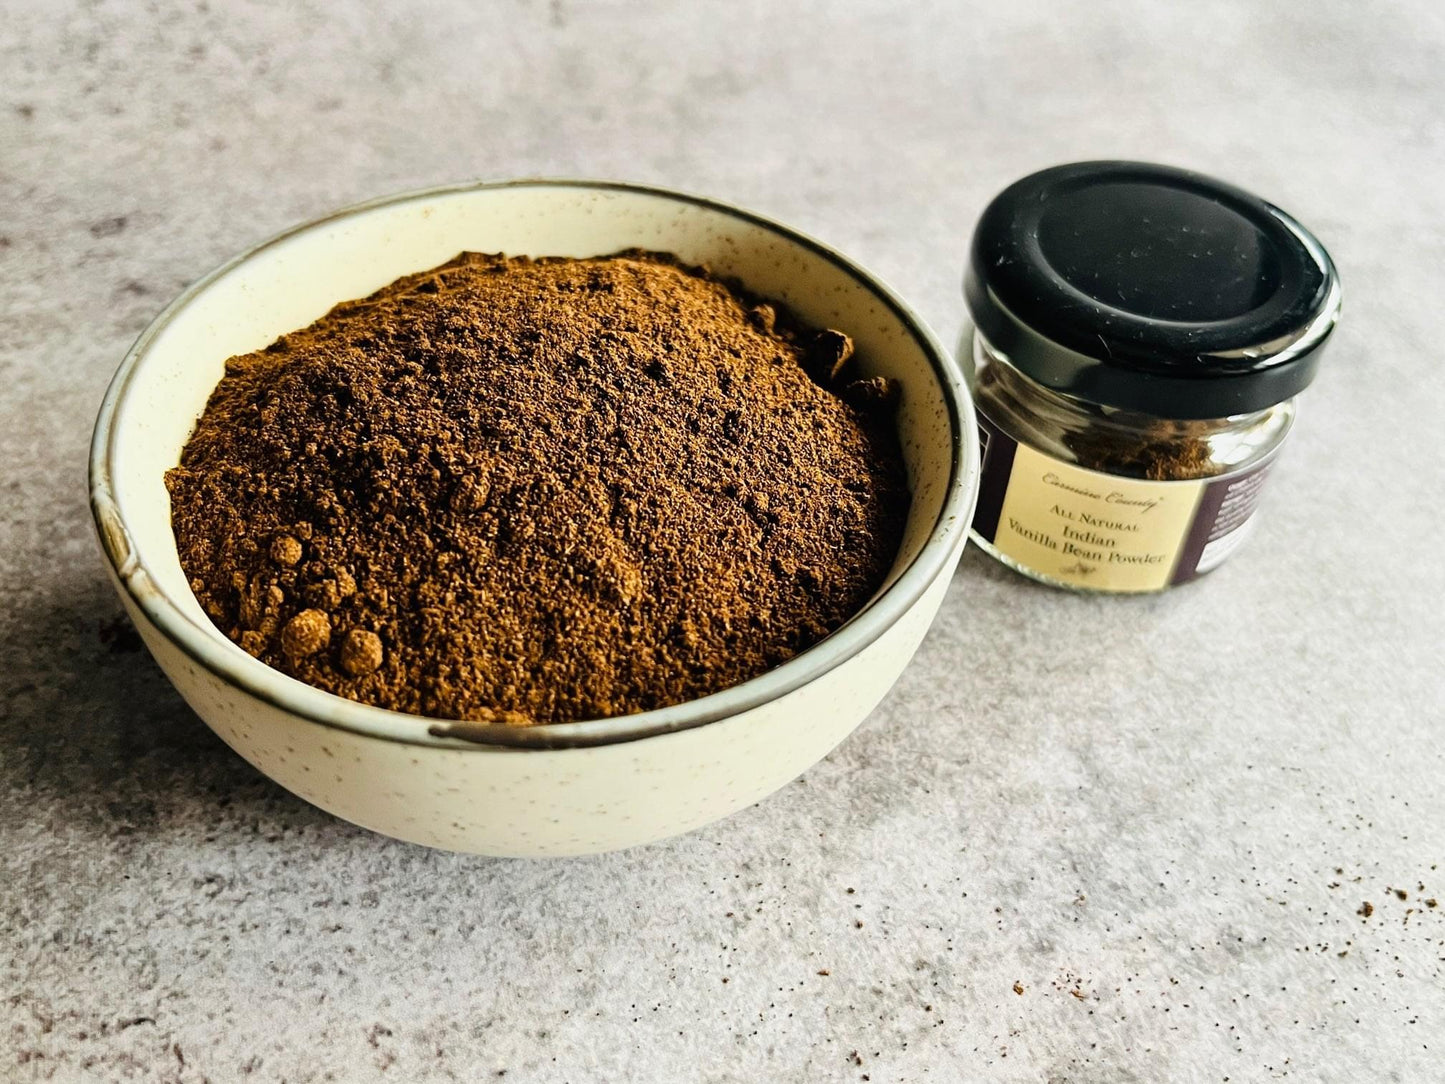 Carmine County All Natural Indian Vanilla Bean Powder 10 g